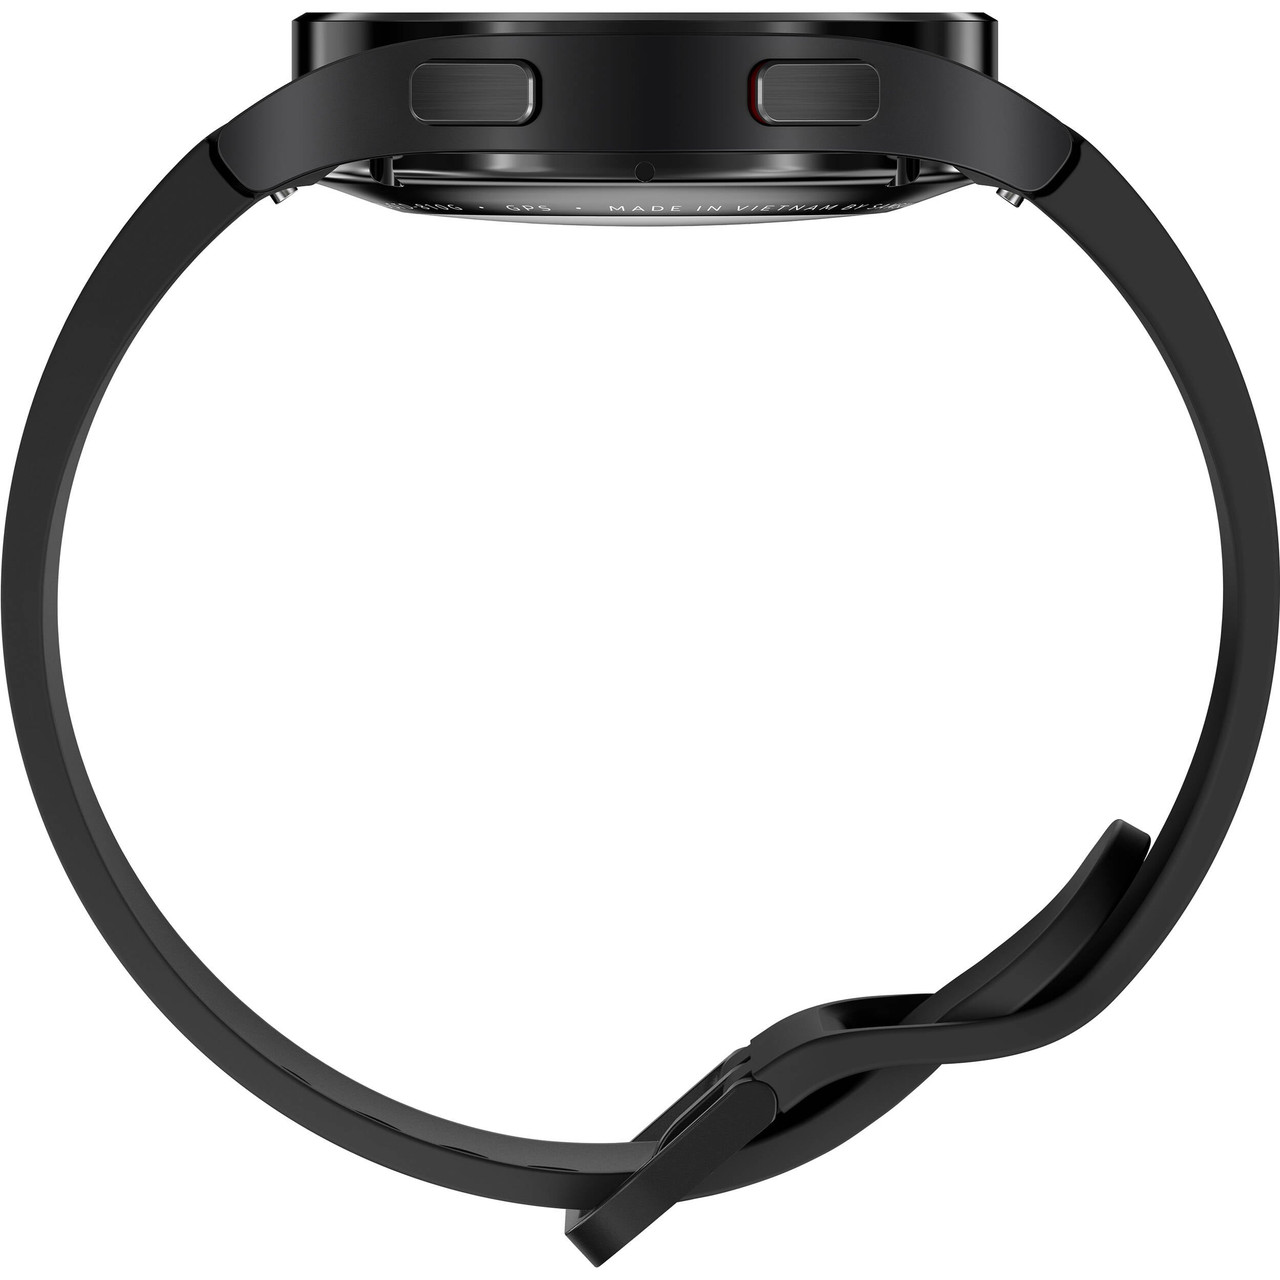 Samsung SM-R860NZKAXAA-RB Galaxy Watch4 40mm Bluetooth, Black - Certified Refurbished